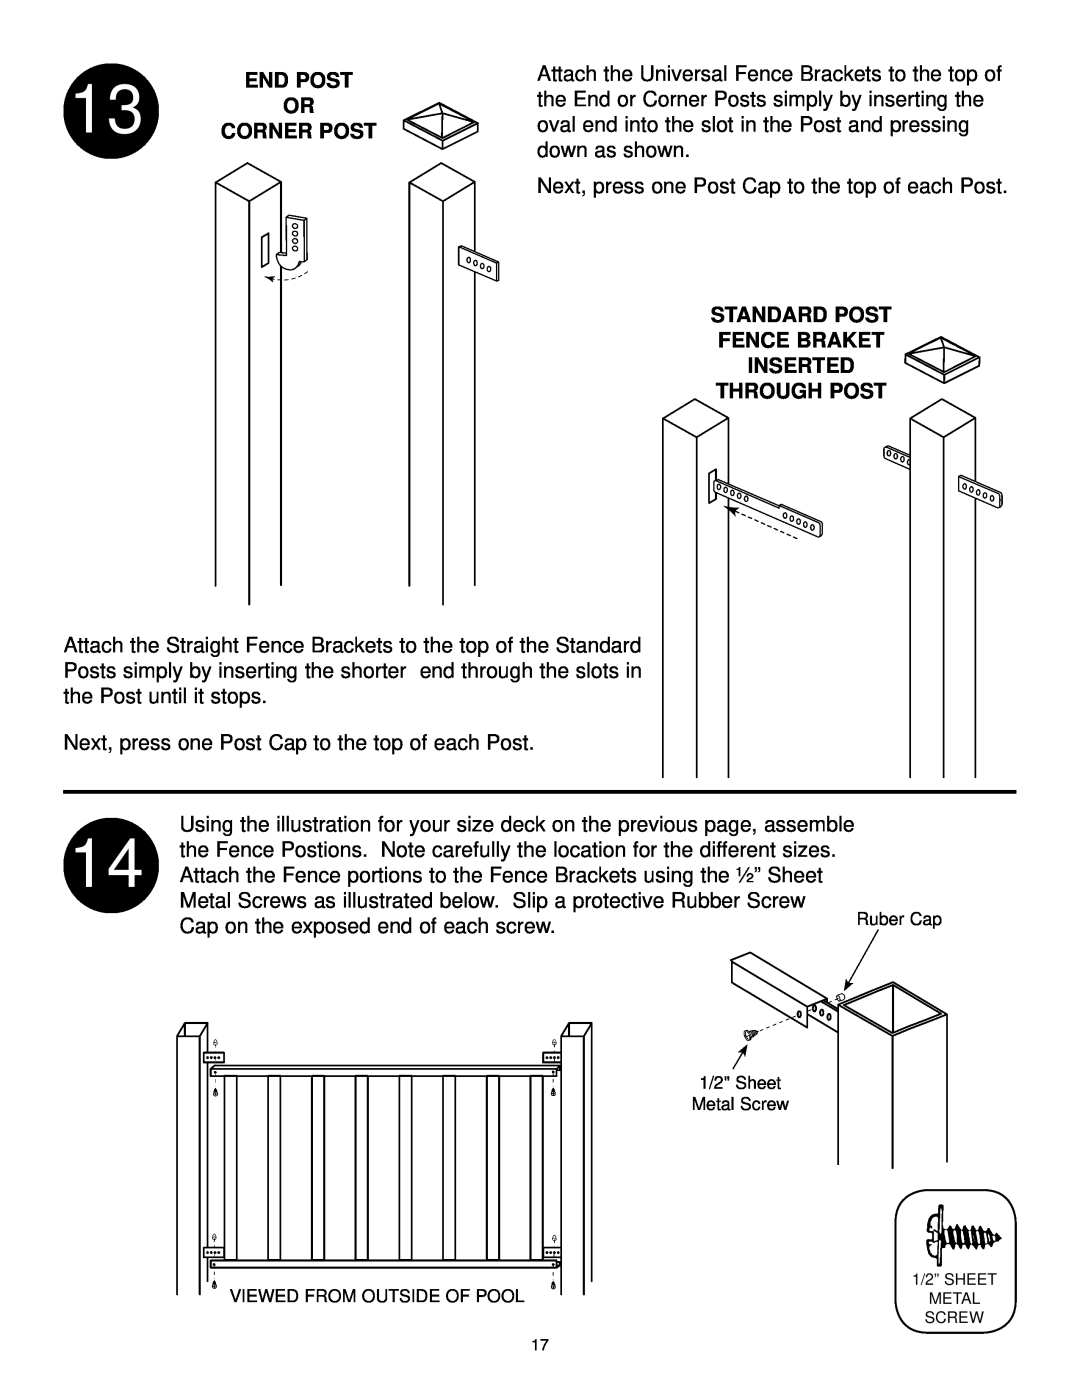 Swim'n Play end deck manual Standard Post Fence Braket Inserted Through Post 